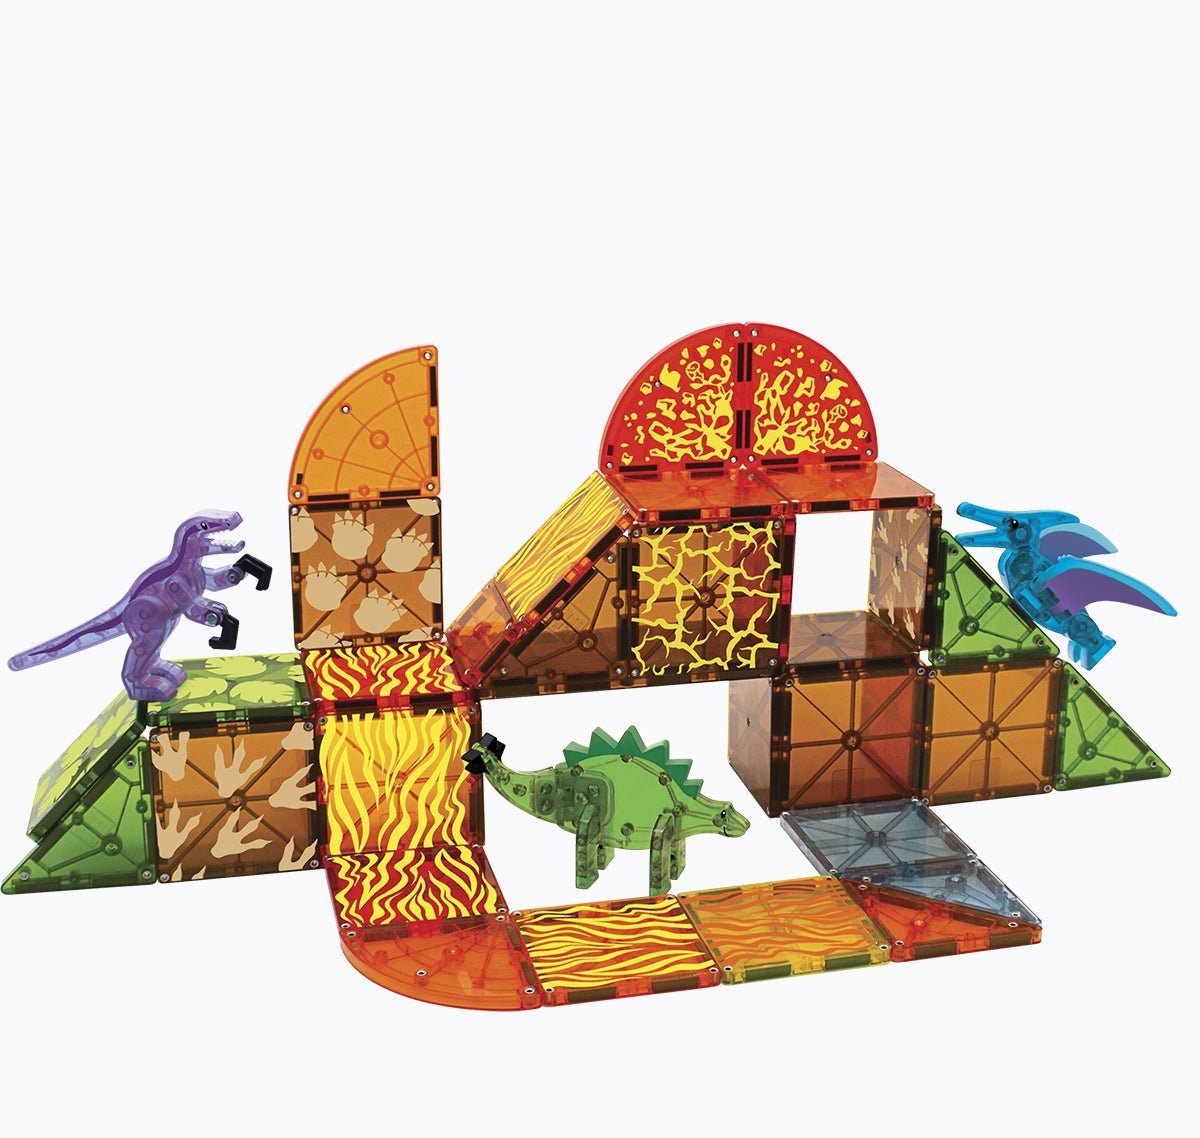 Magna Tiles Dinosaur World | Magna Tiles